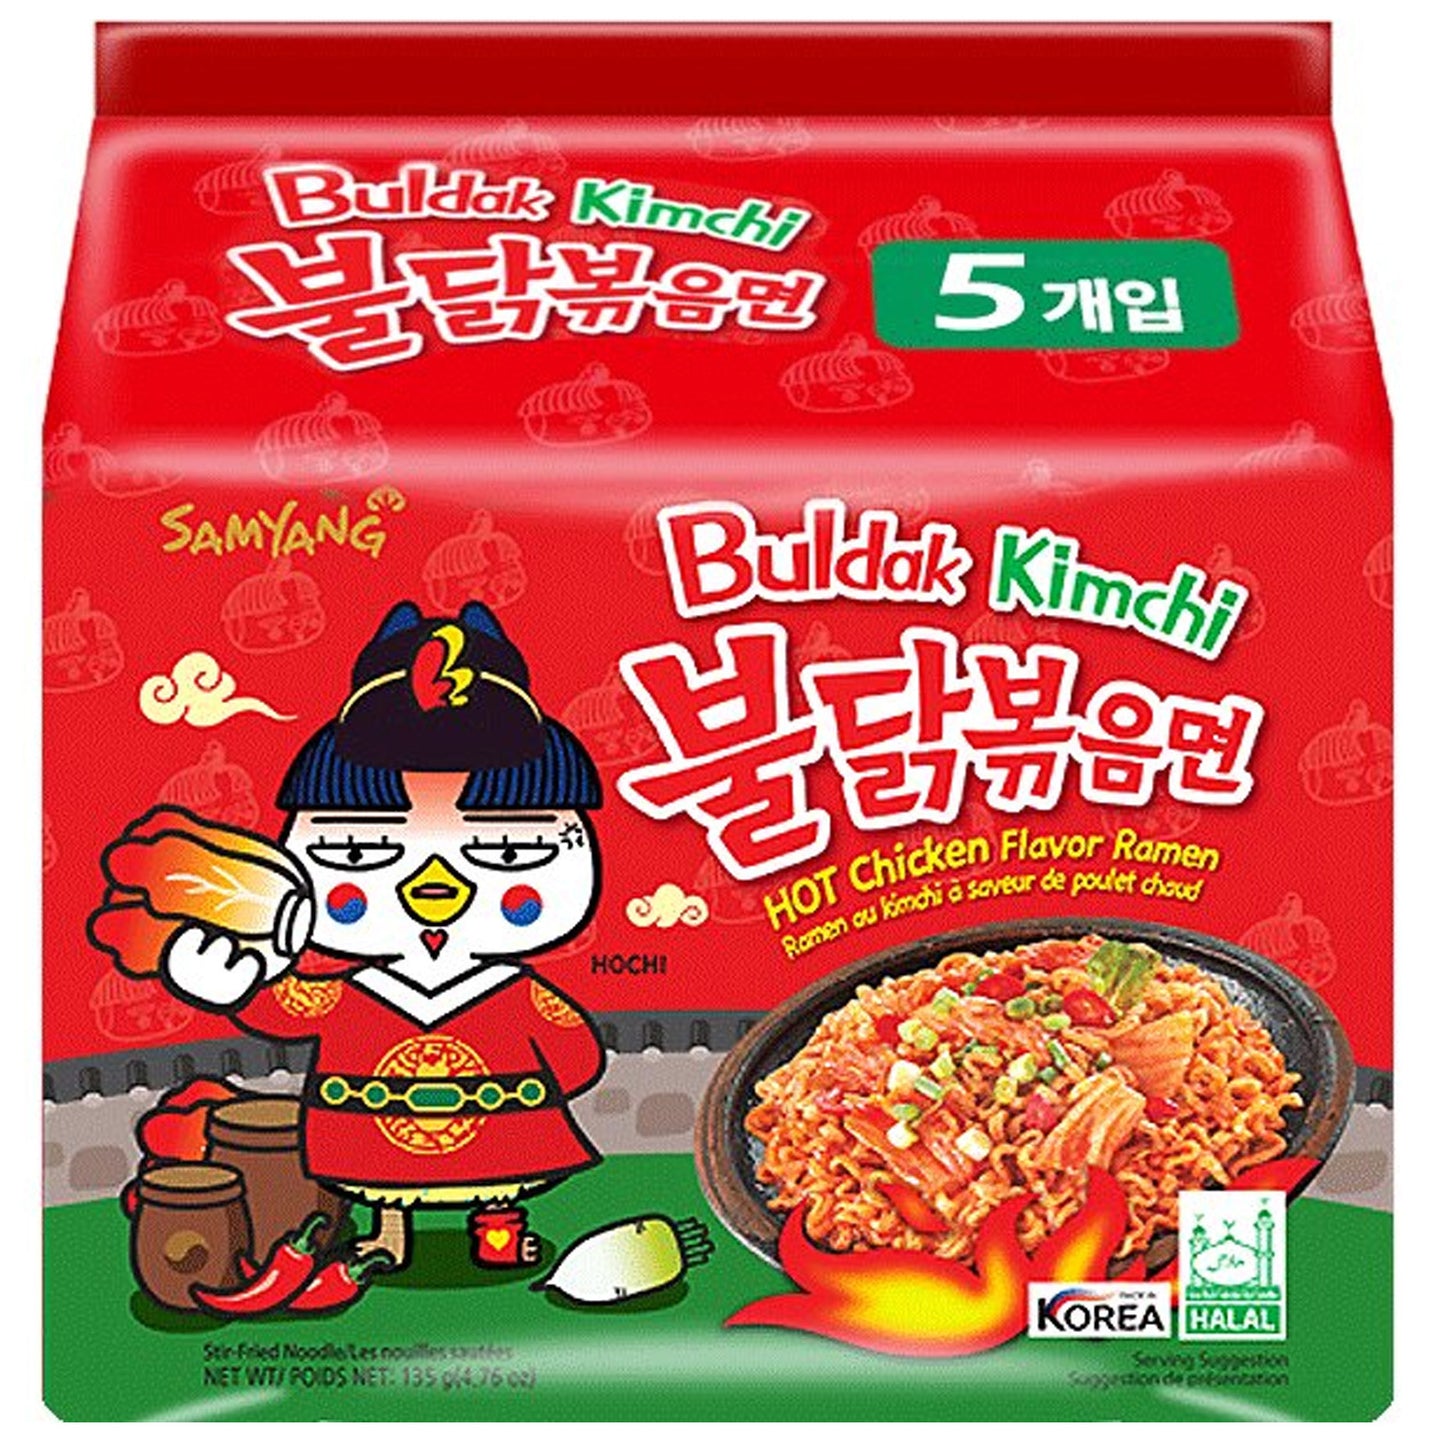 Samyang Buldak Kimchi | 8 x 5 x 135g